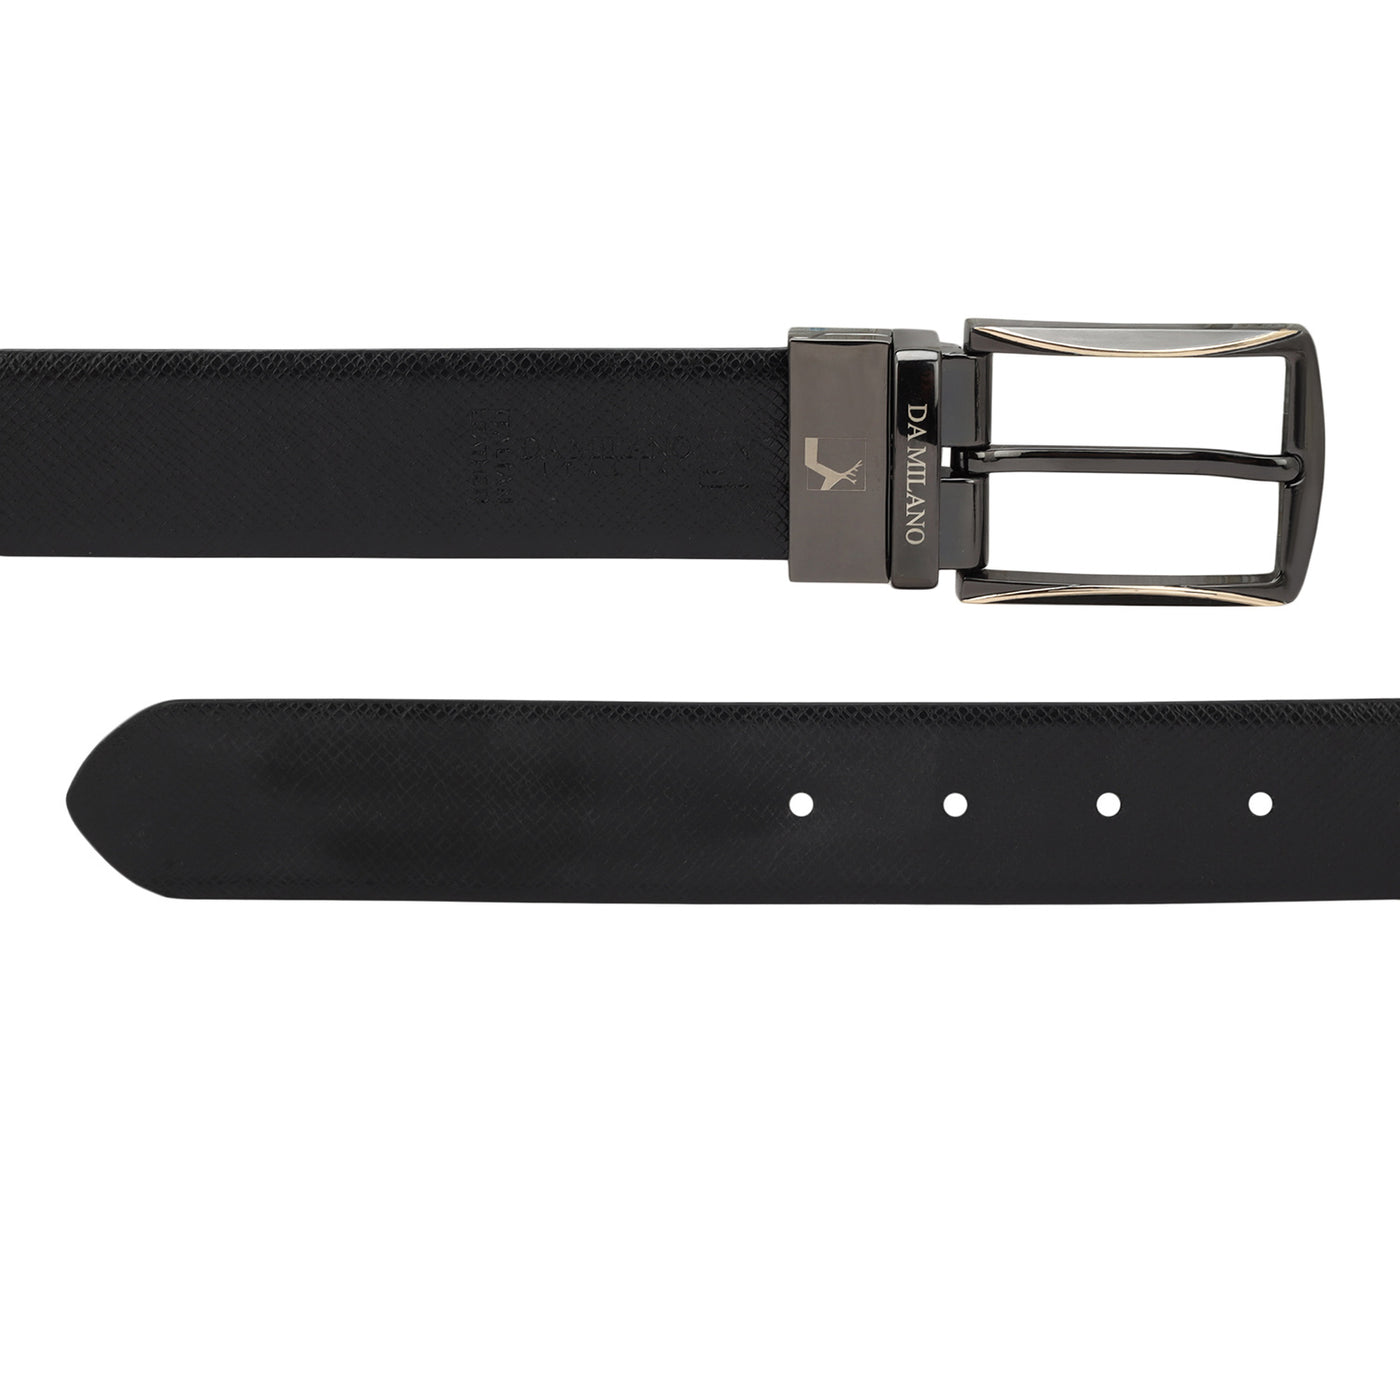 Saffiano Leather Mens Belt - Brown & Black